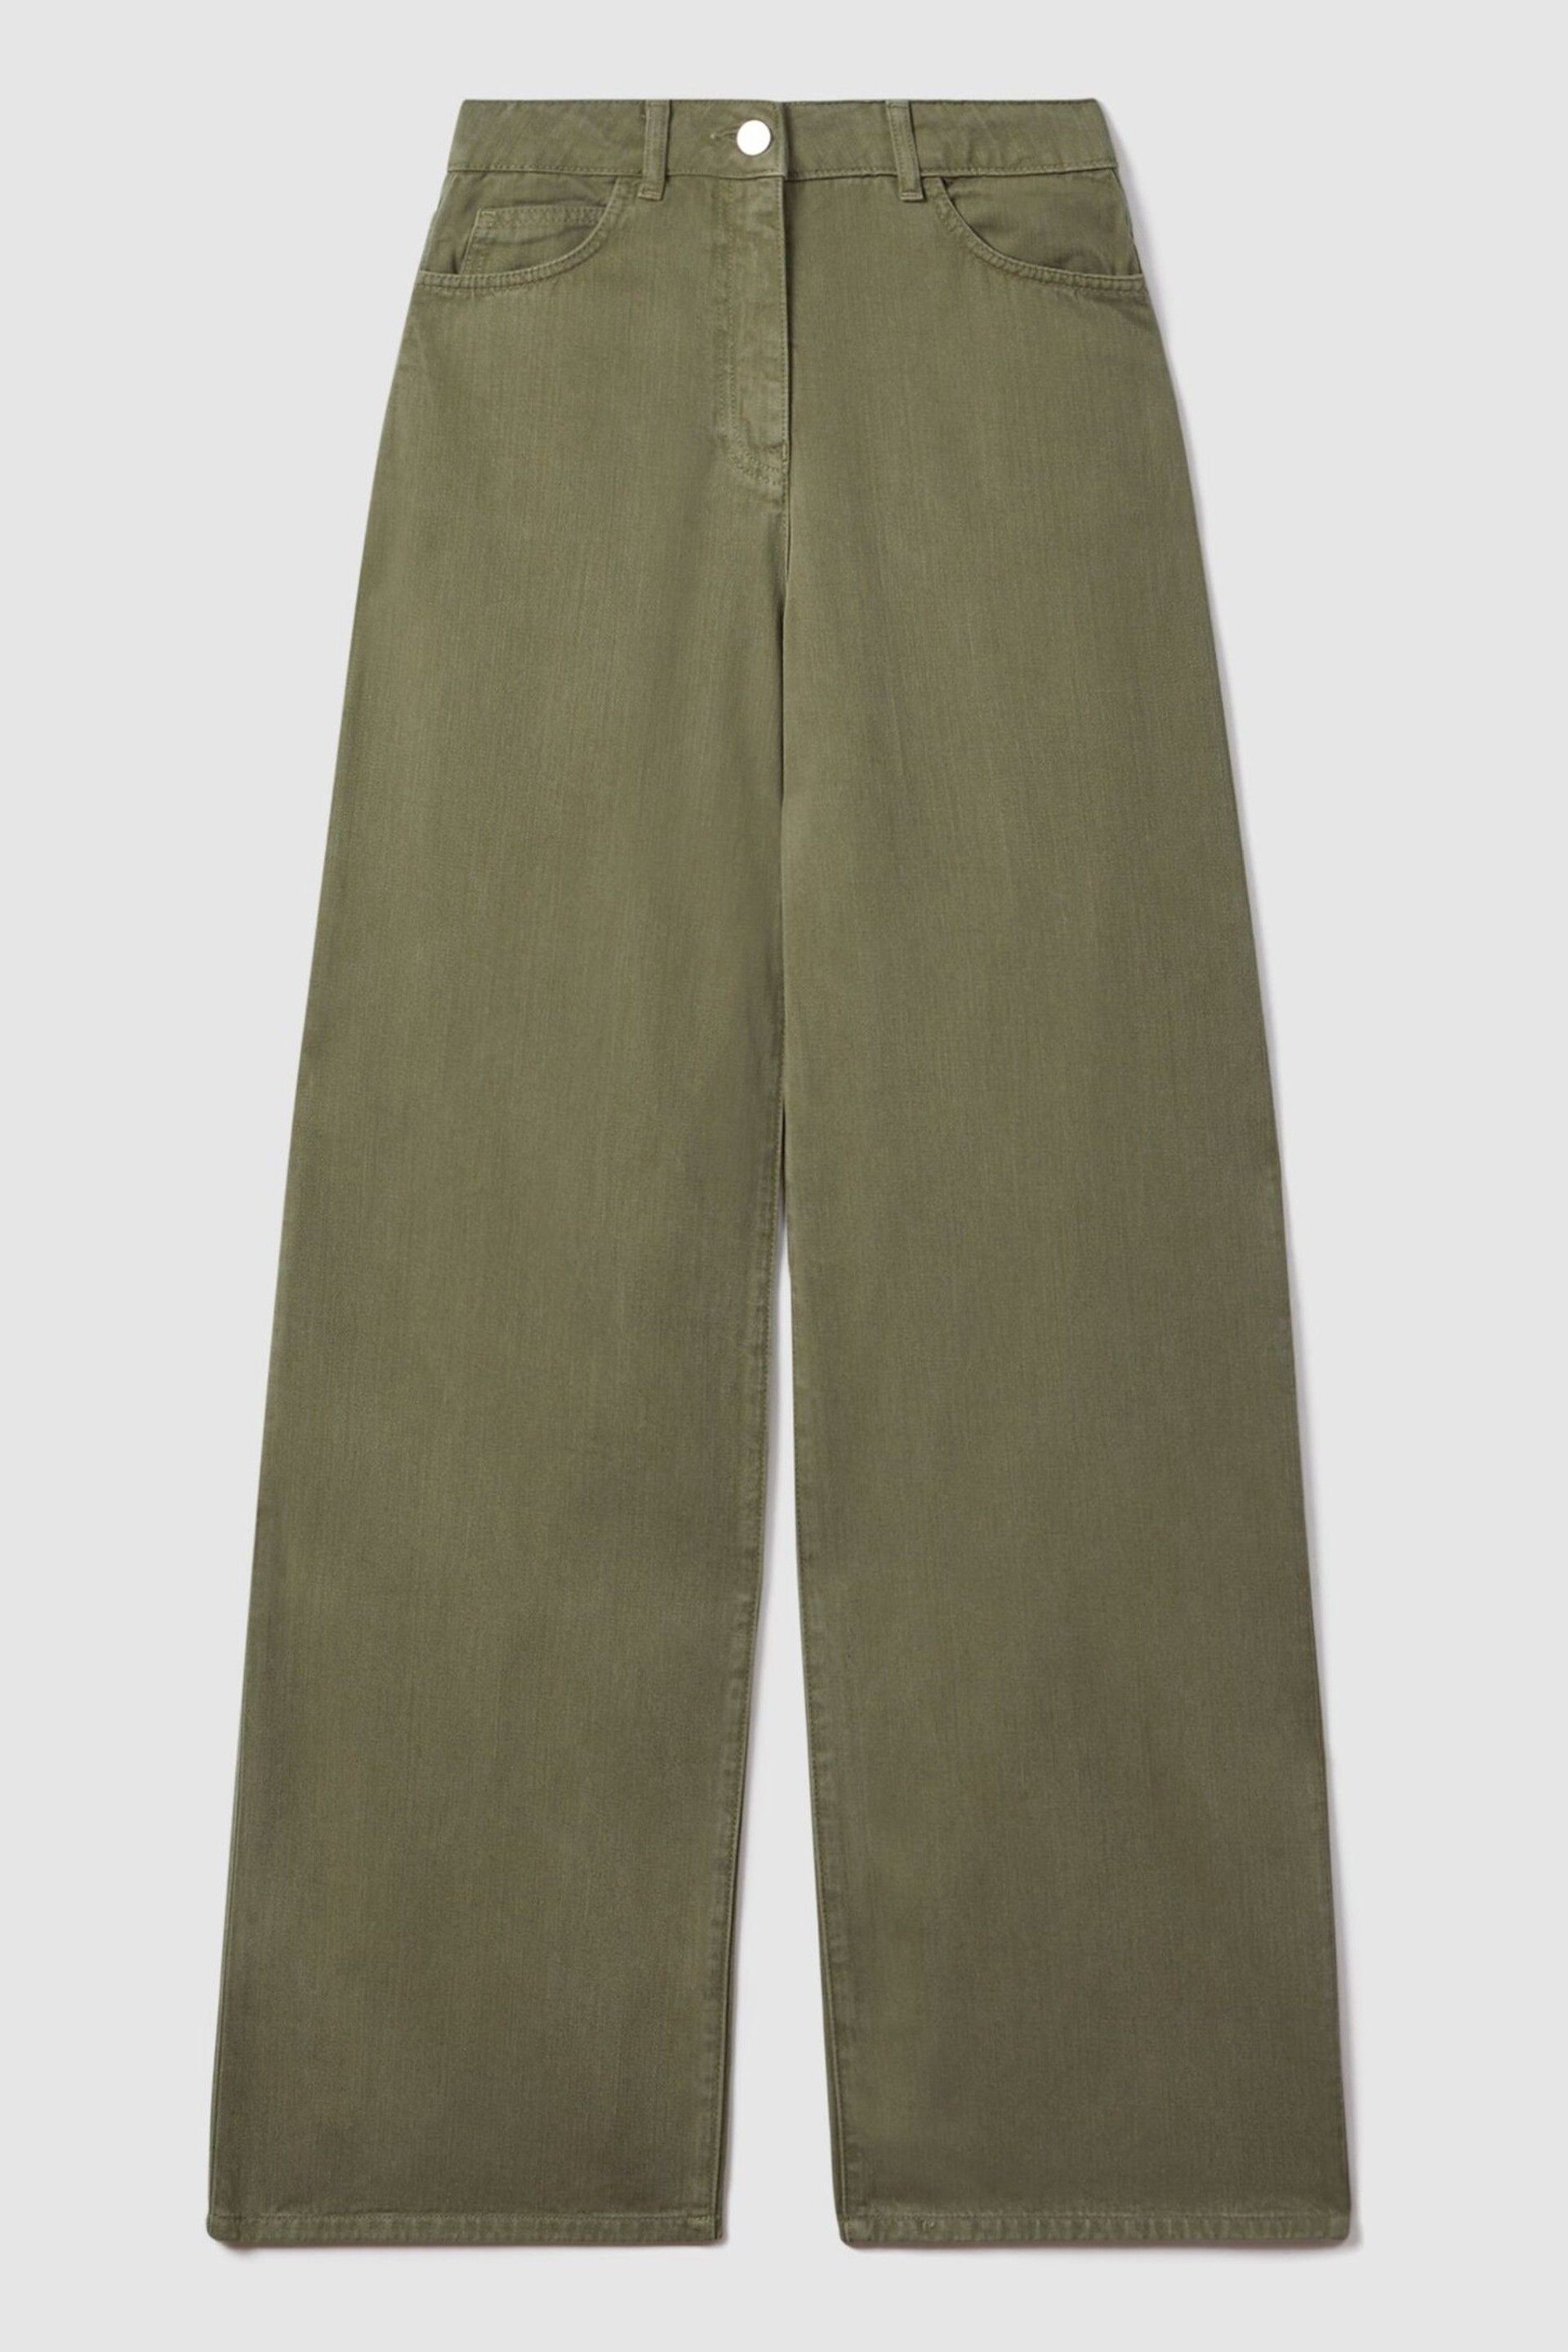 Reiss Khaki Colorado Petite Garment Dyed Wide Leg Trousers - Image 2 of 6